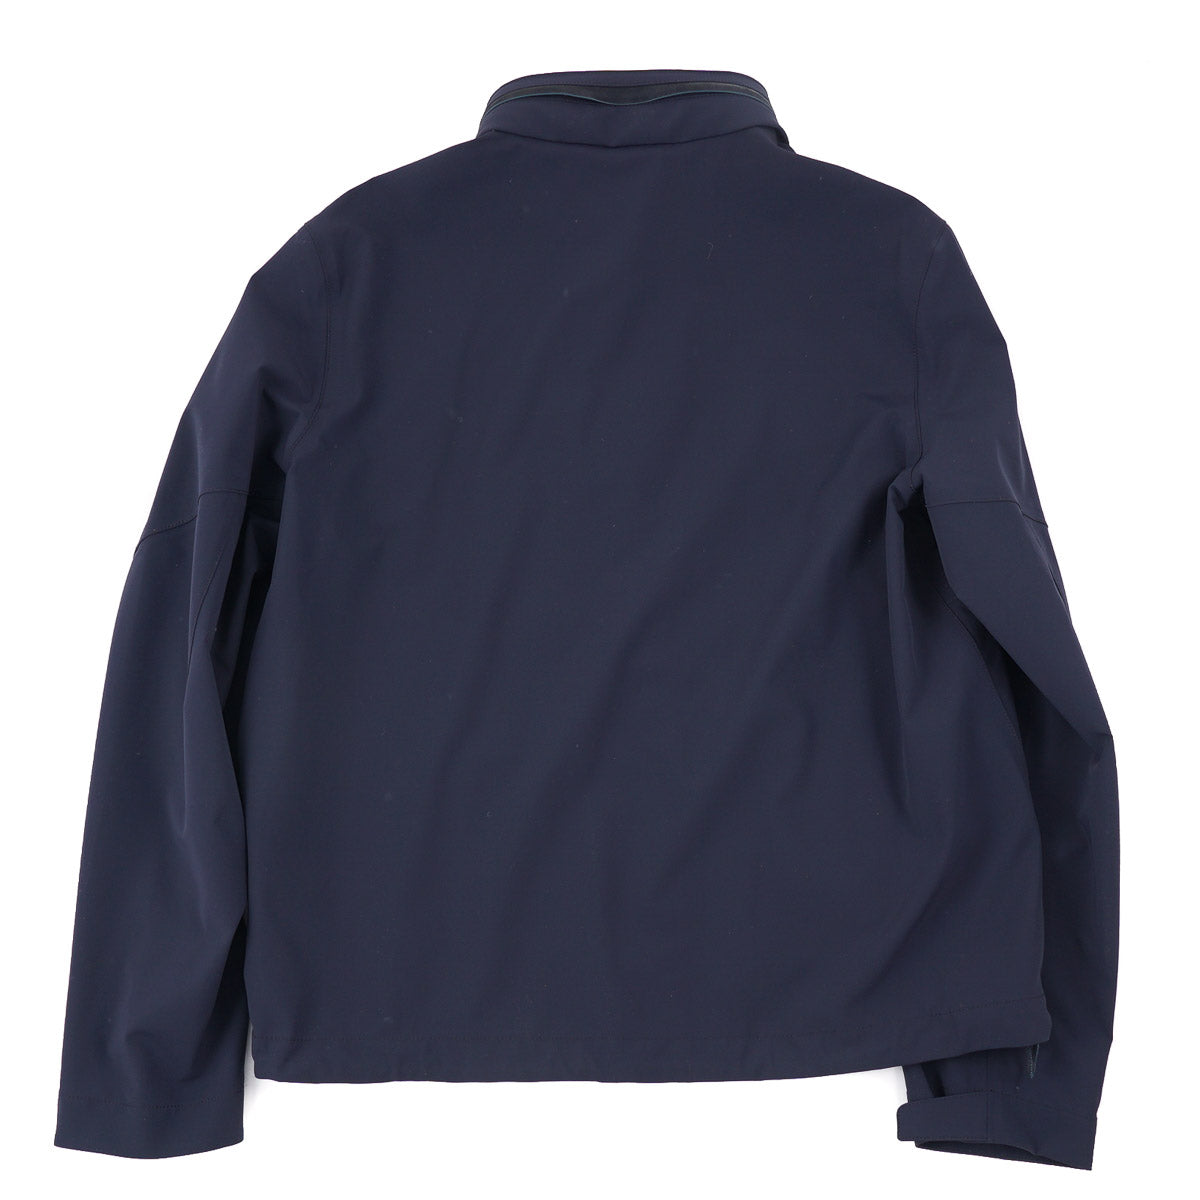 Ermenegildo Zegna Weather-Repellent Jacket - Top Shelf Apparel